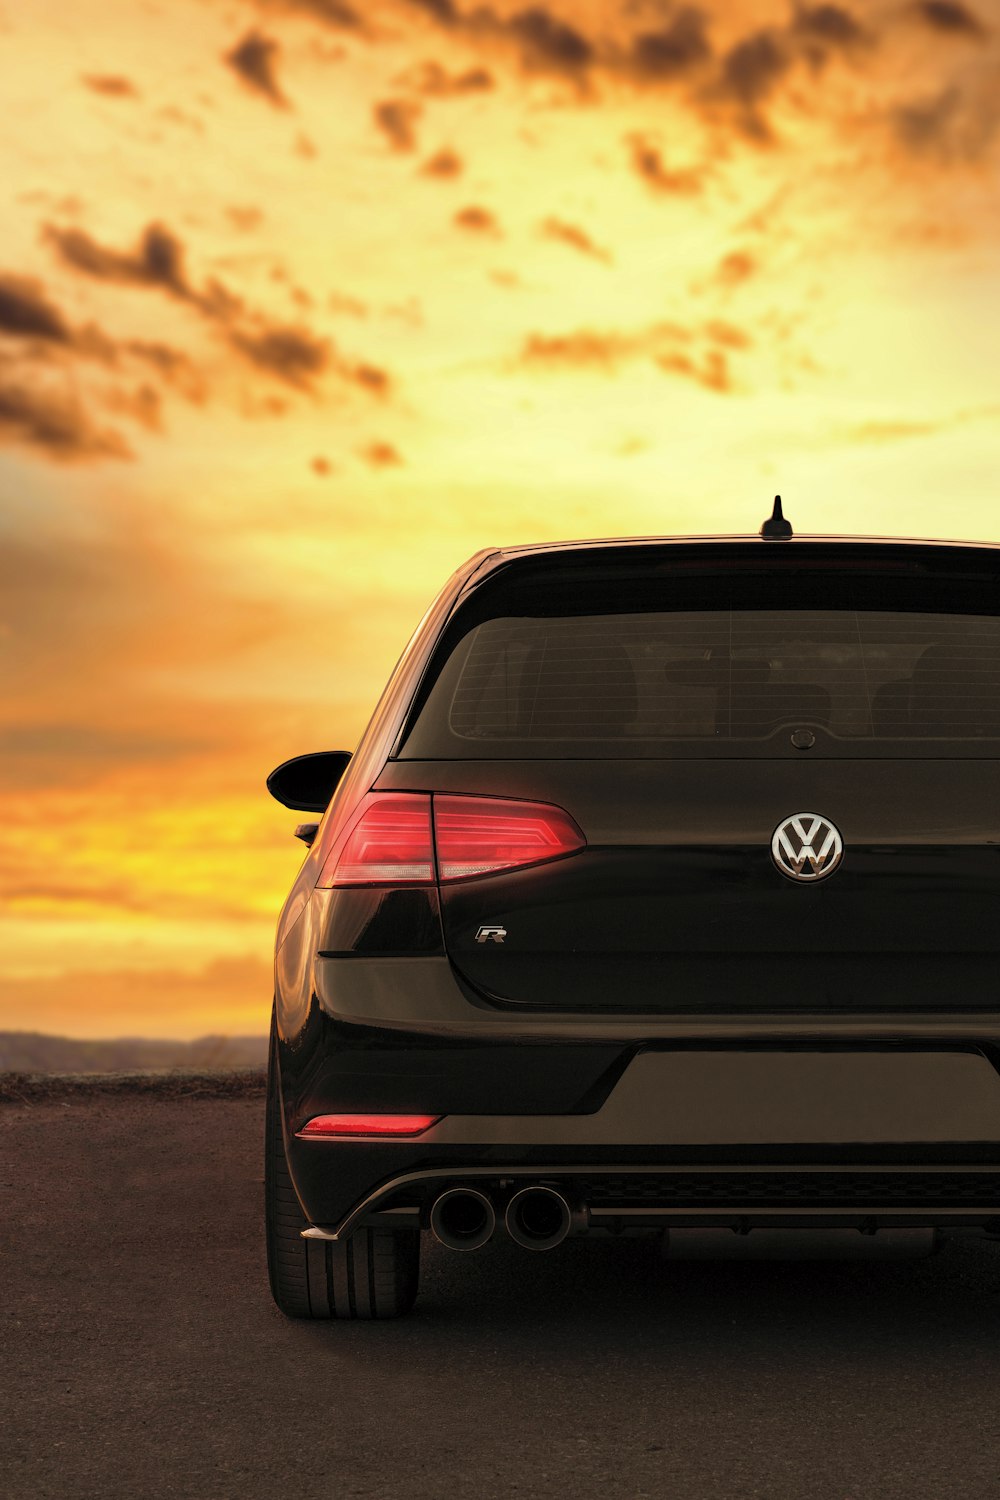 Volkswagen Golf Pictures | Download Free Images on Unsplash